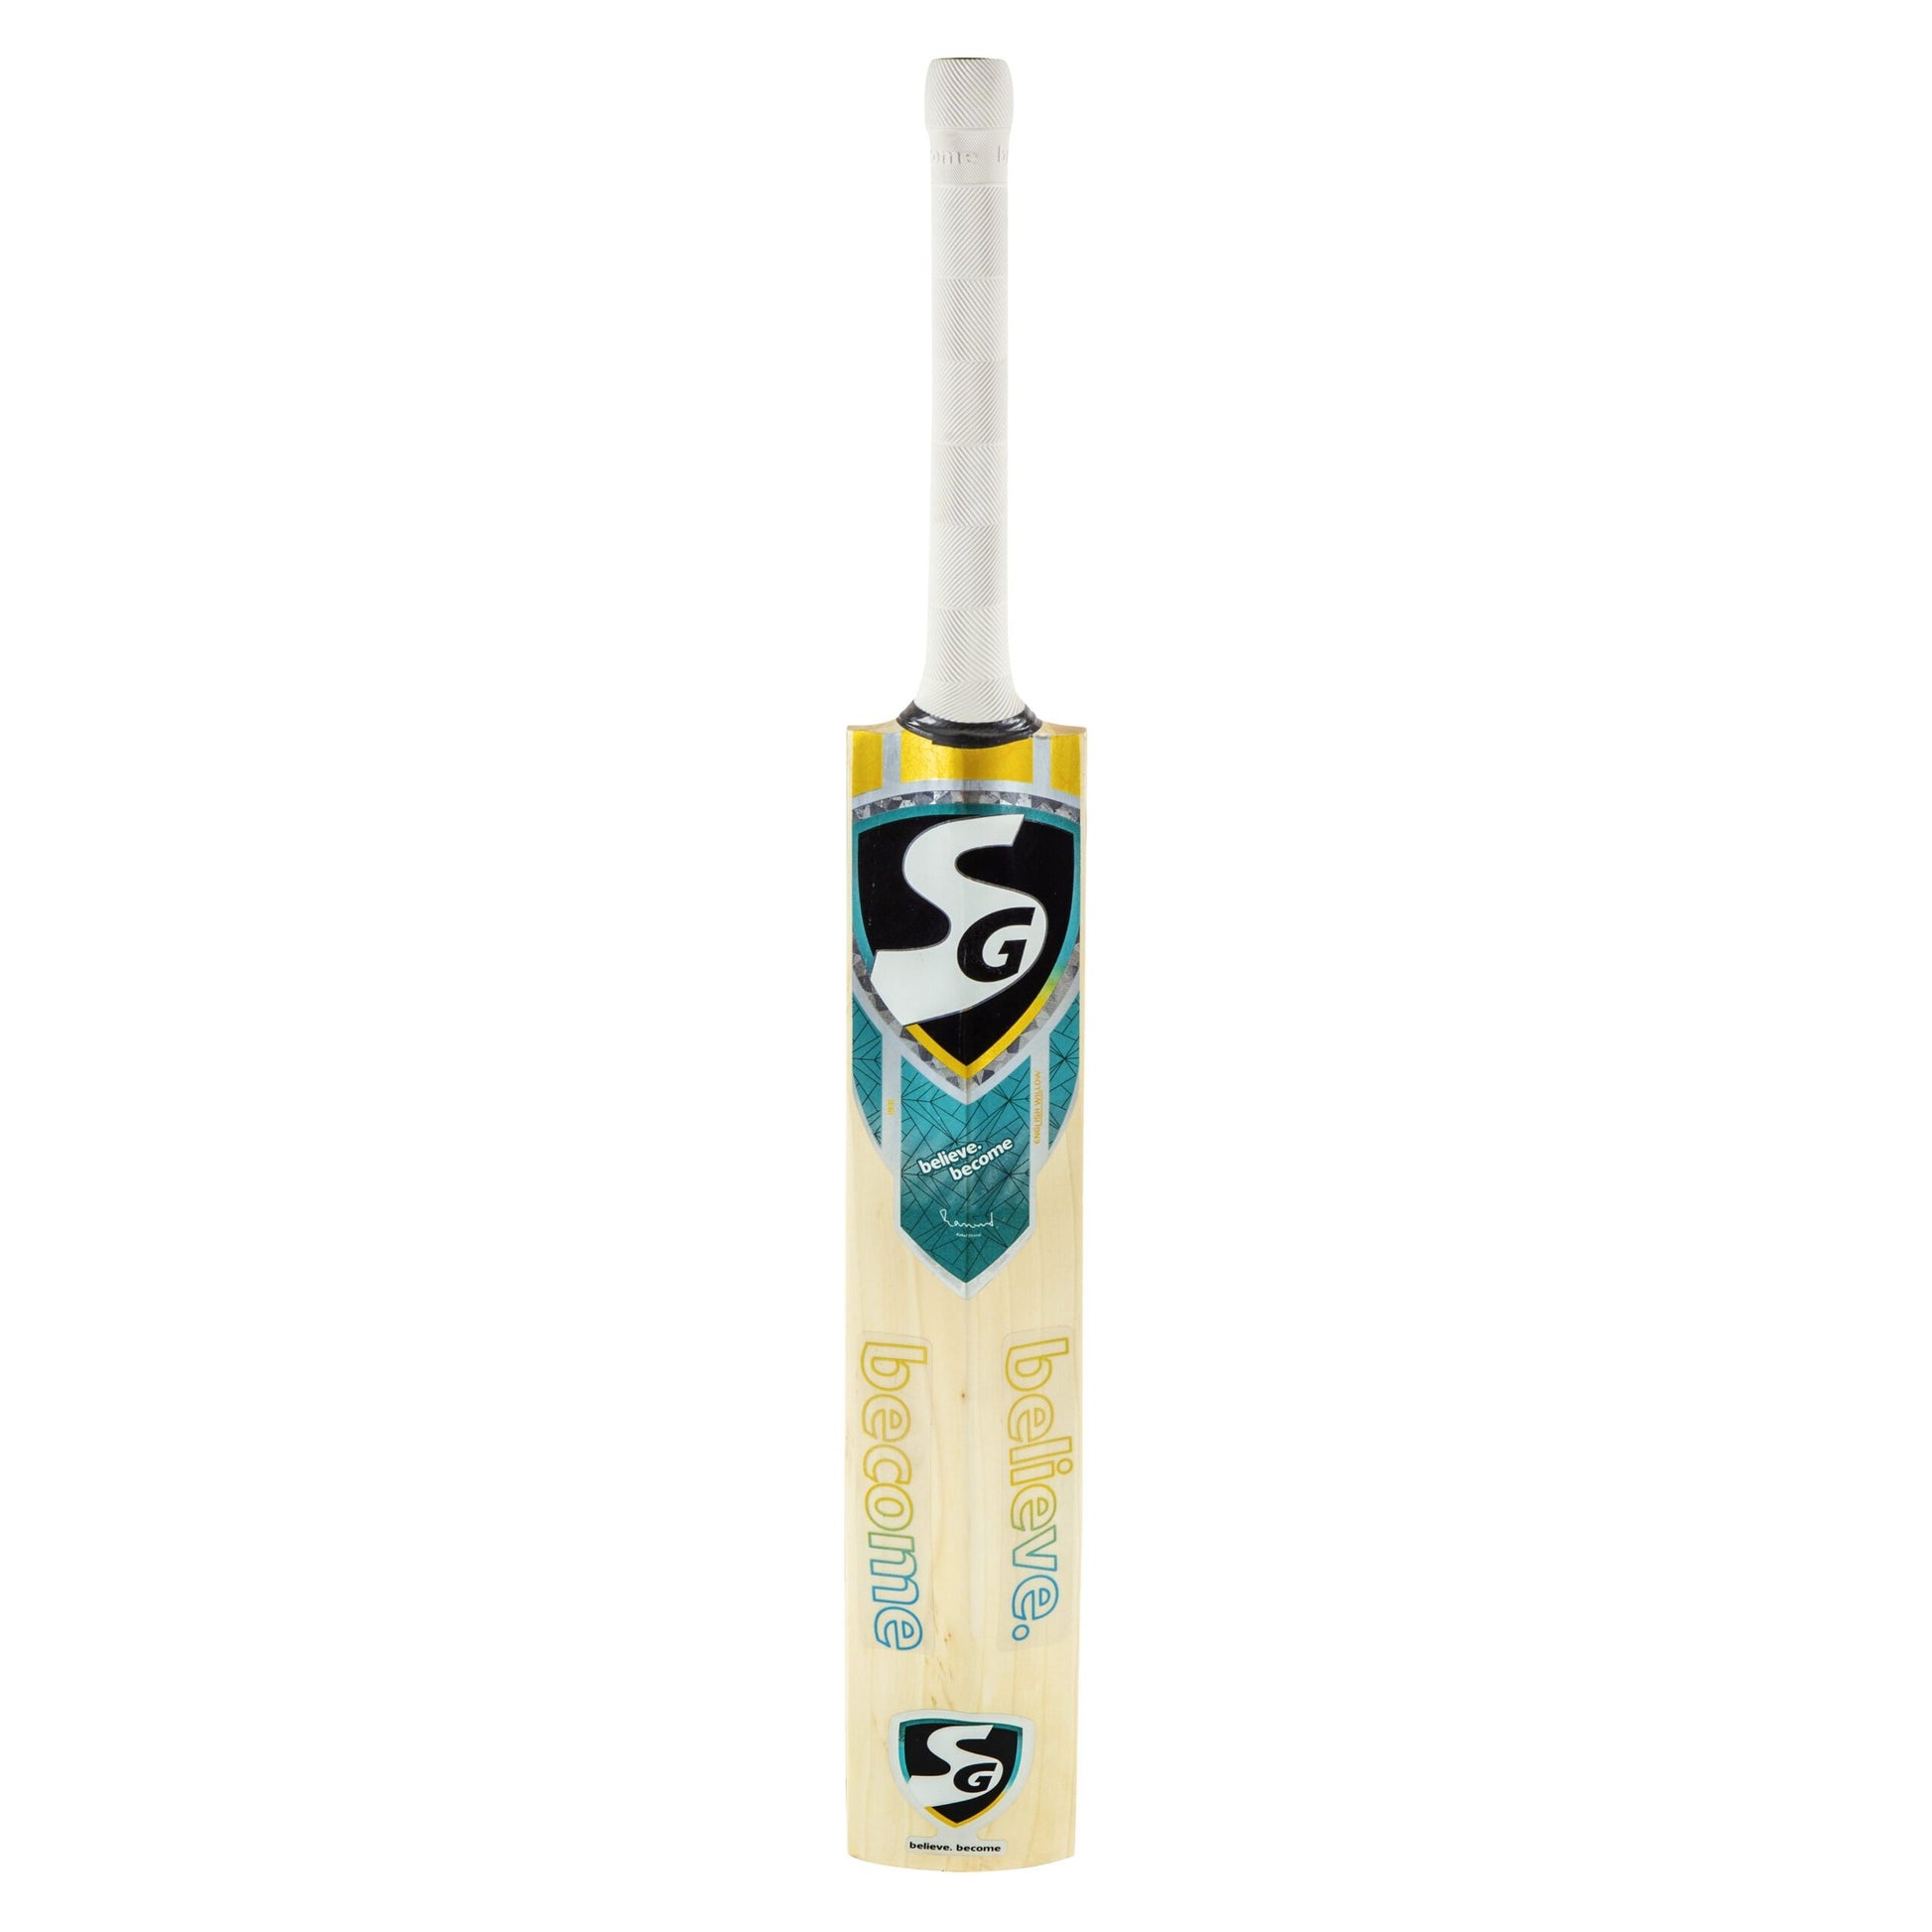 Hiscore Xtreme Traditionally Shaped English Willow grade 6 Cricket Bat (Leather Ball)